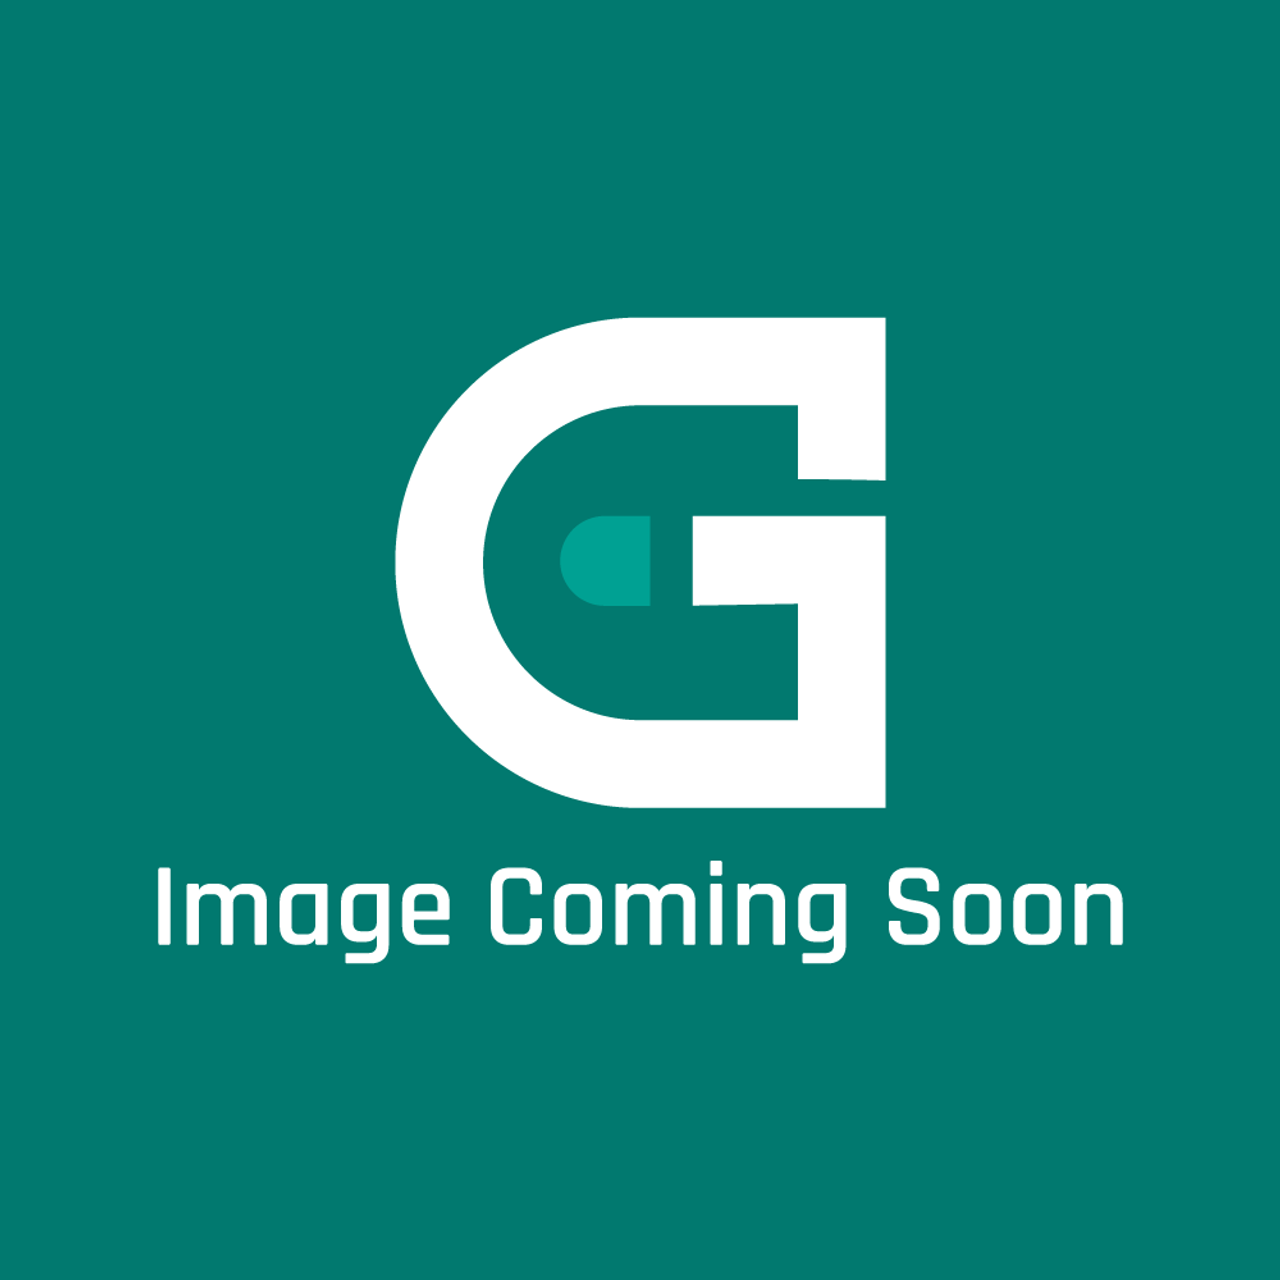 Garland CK4529909 - Sonic Menu Program Kit W Ith 45 - Image Coming Soon!